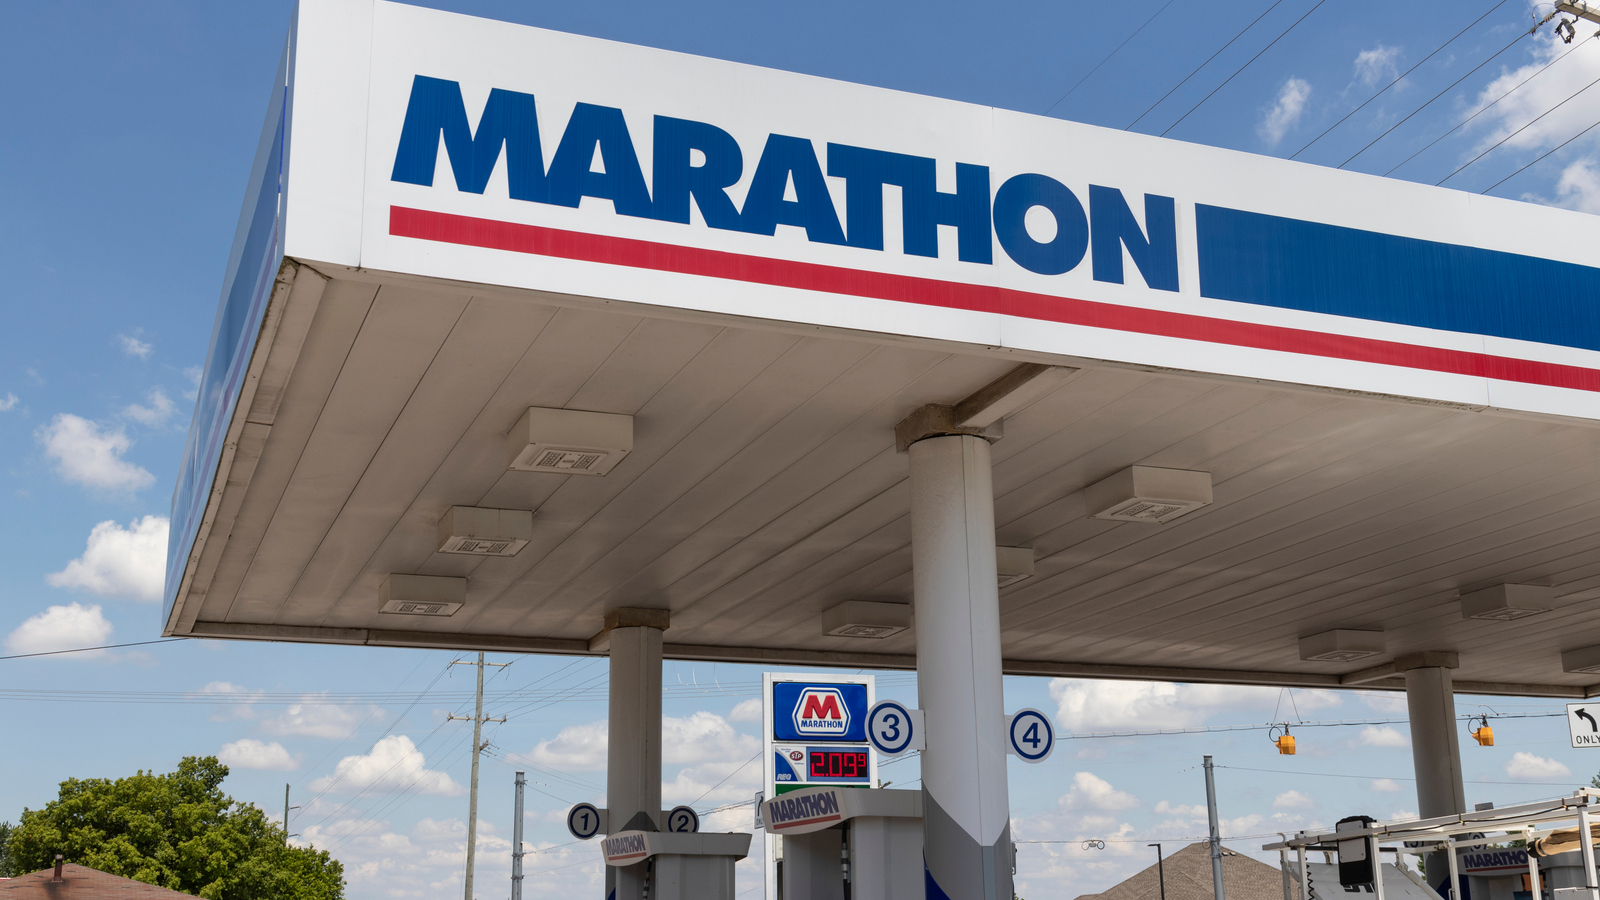 Marathon Oil (MRO) gas station carport on sunny day with blue sky background